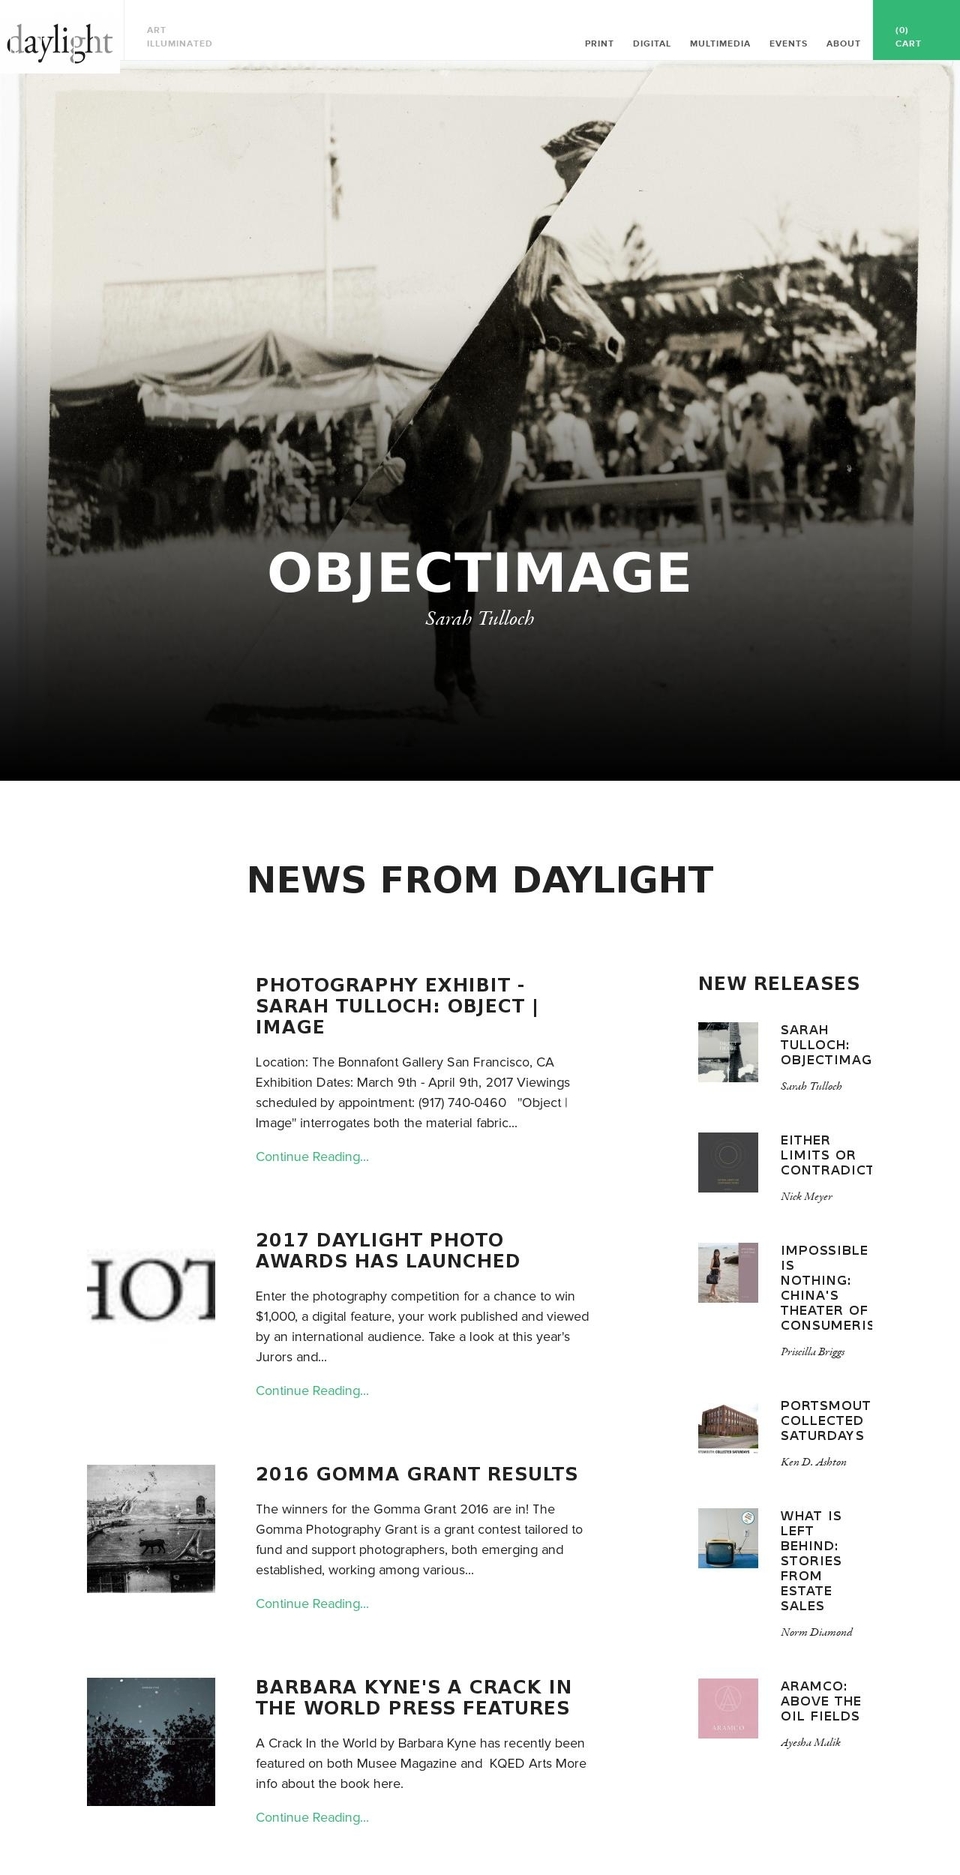 daylightbooks.org shopify website screenshot